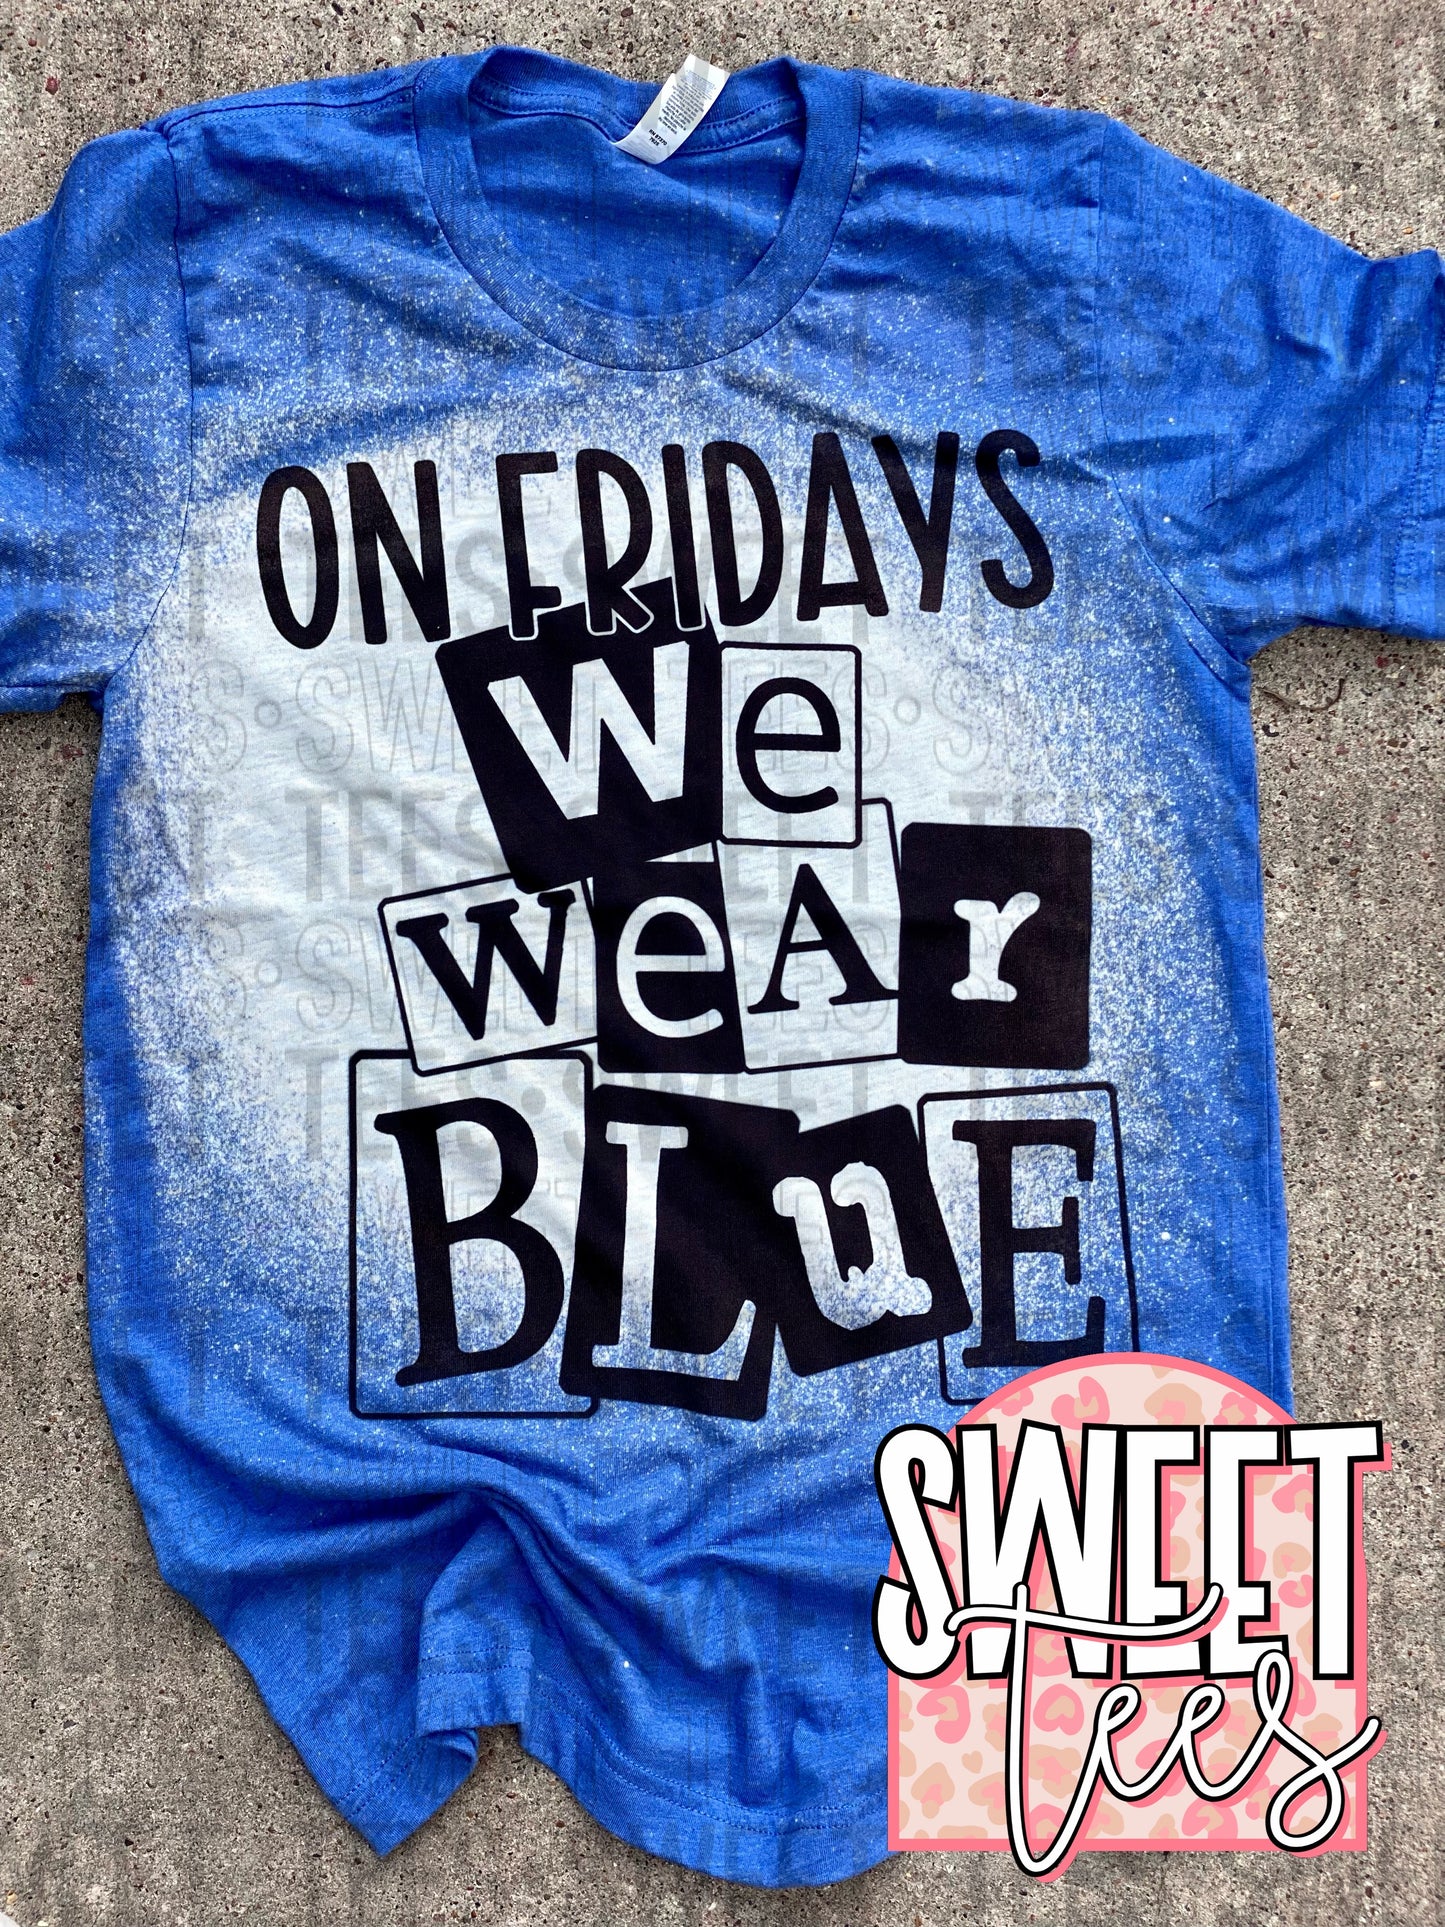 On Fridays We Wear Blue tee